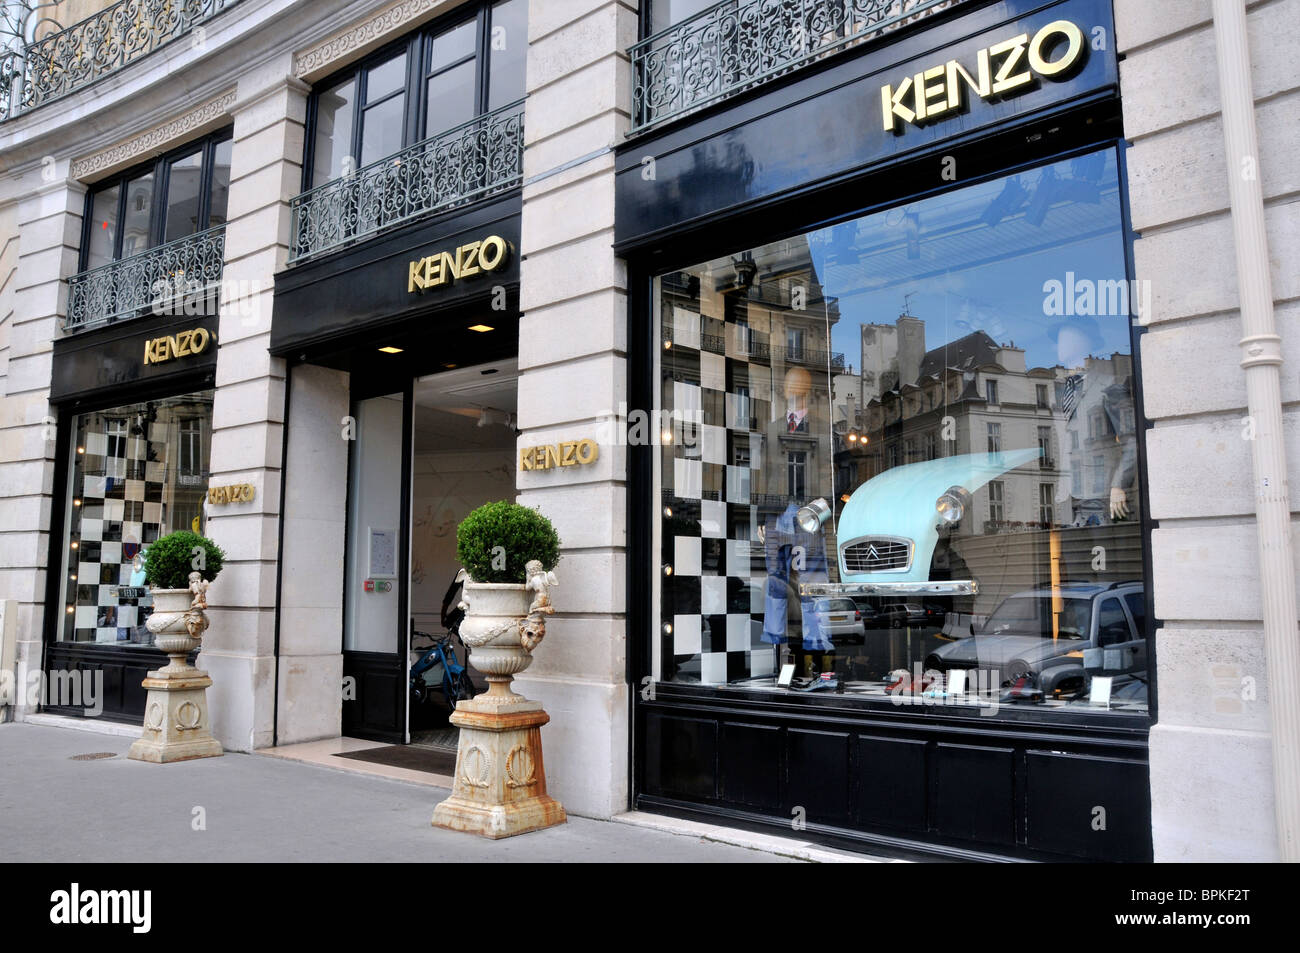 kenzo londres OFF 64% - Online Shopping 